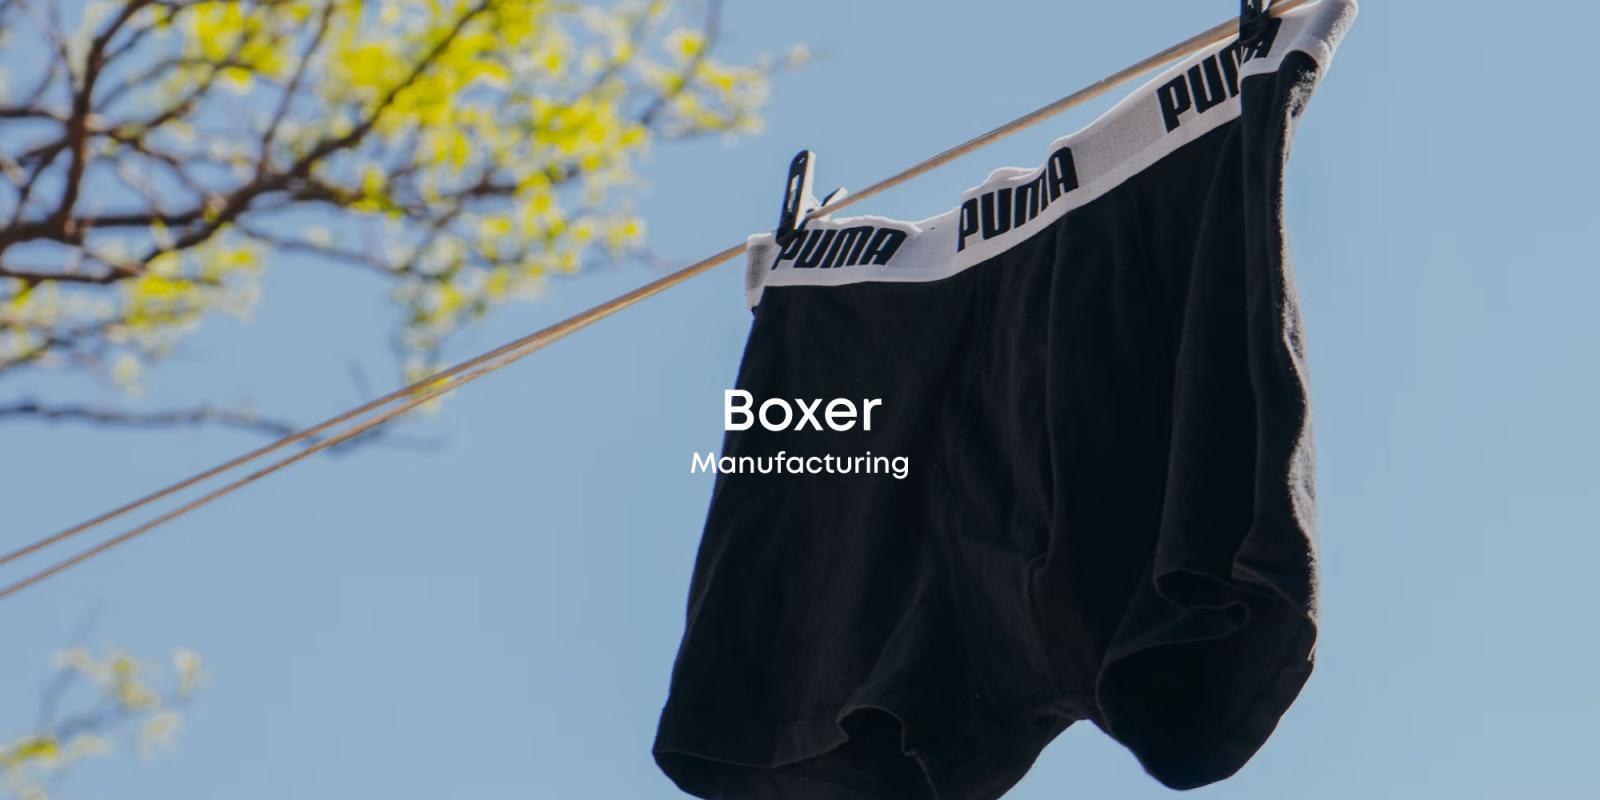 Boxer Manufacturing